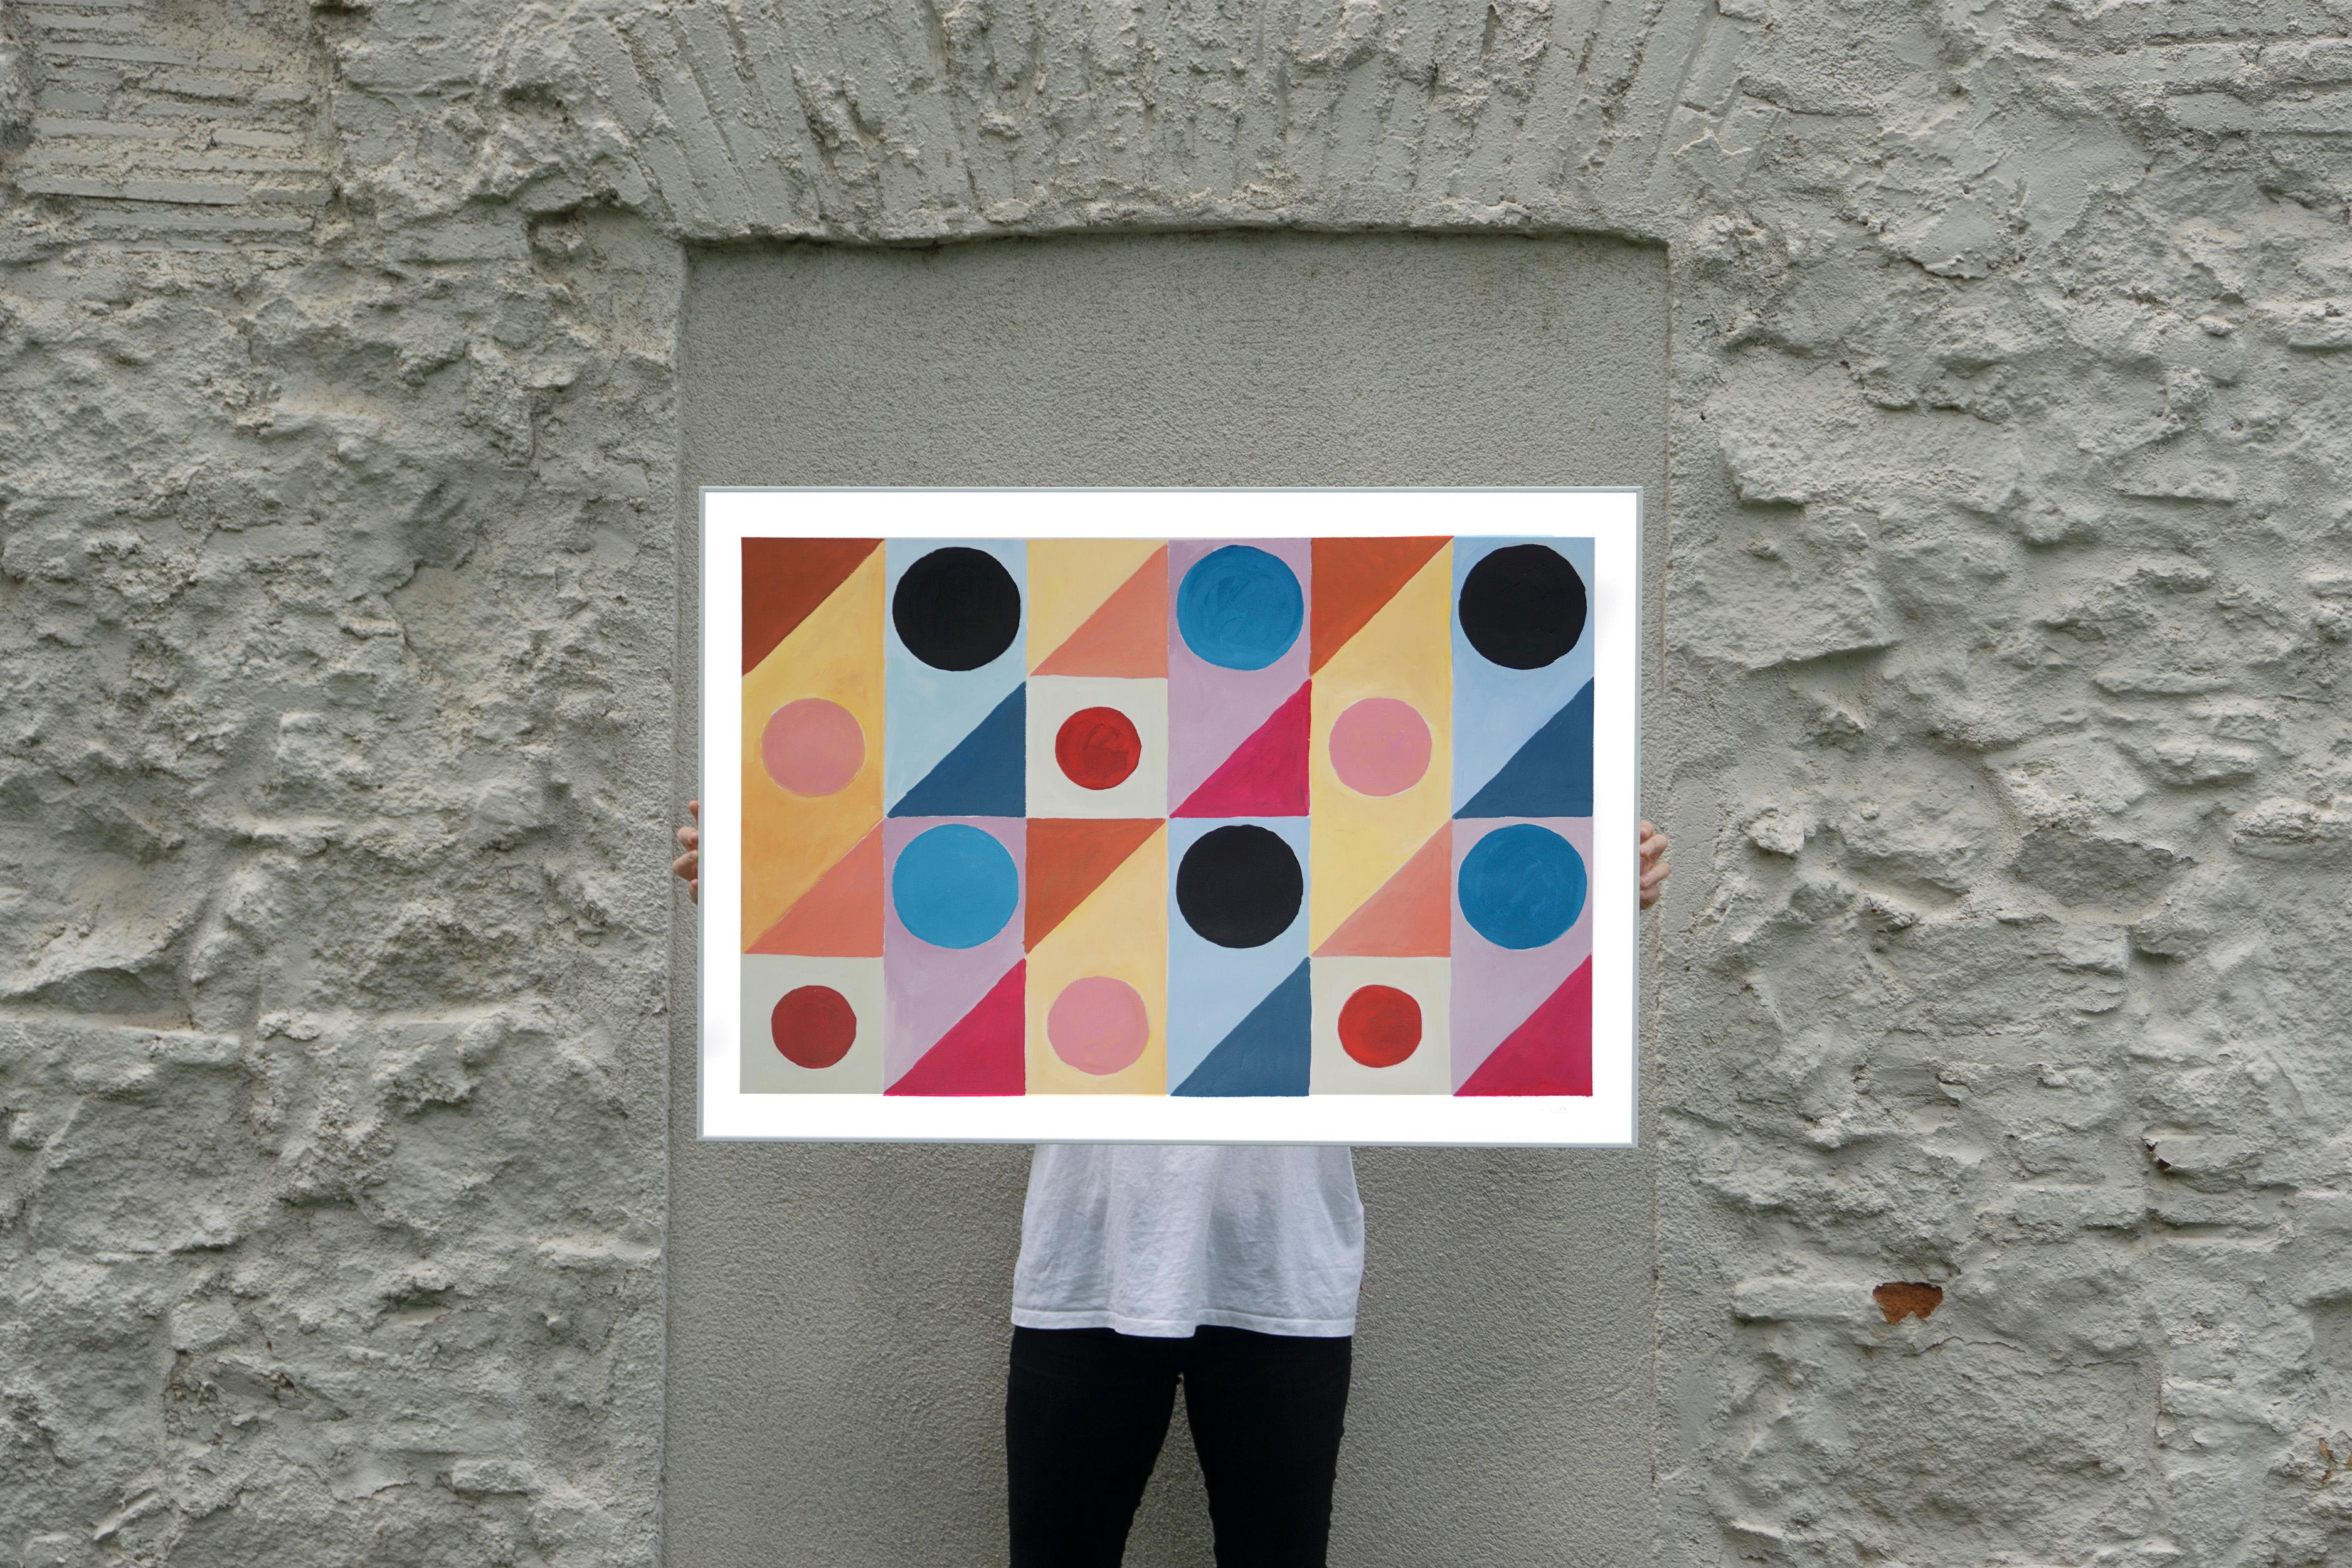 Mid-Tone Diagonal Transparenz, Geometrisches Patchwork, Rosa, Lila, Schwarze Kreise (Geometrische Abstraktion), Painting, von Natalia Roman